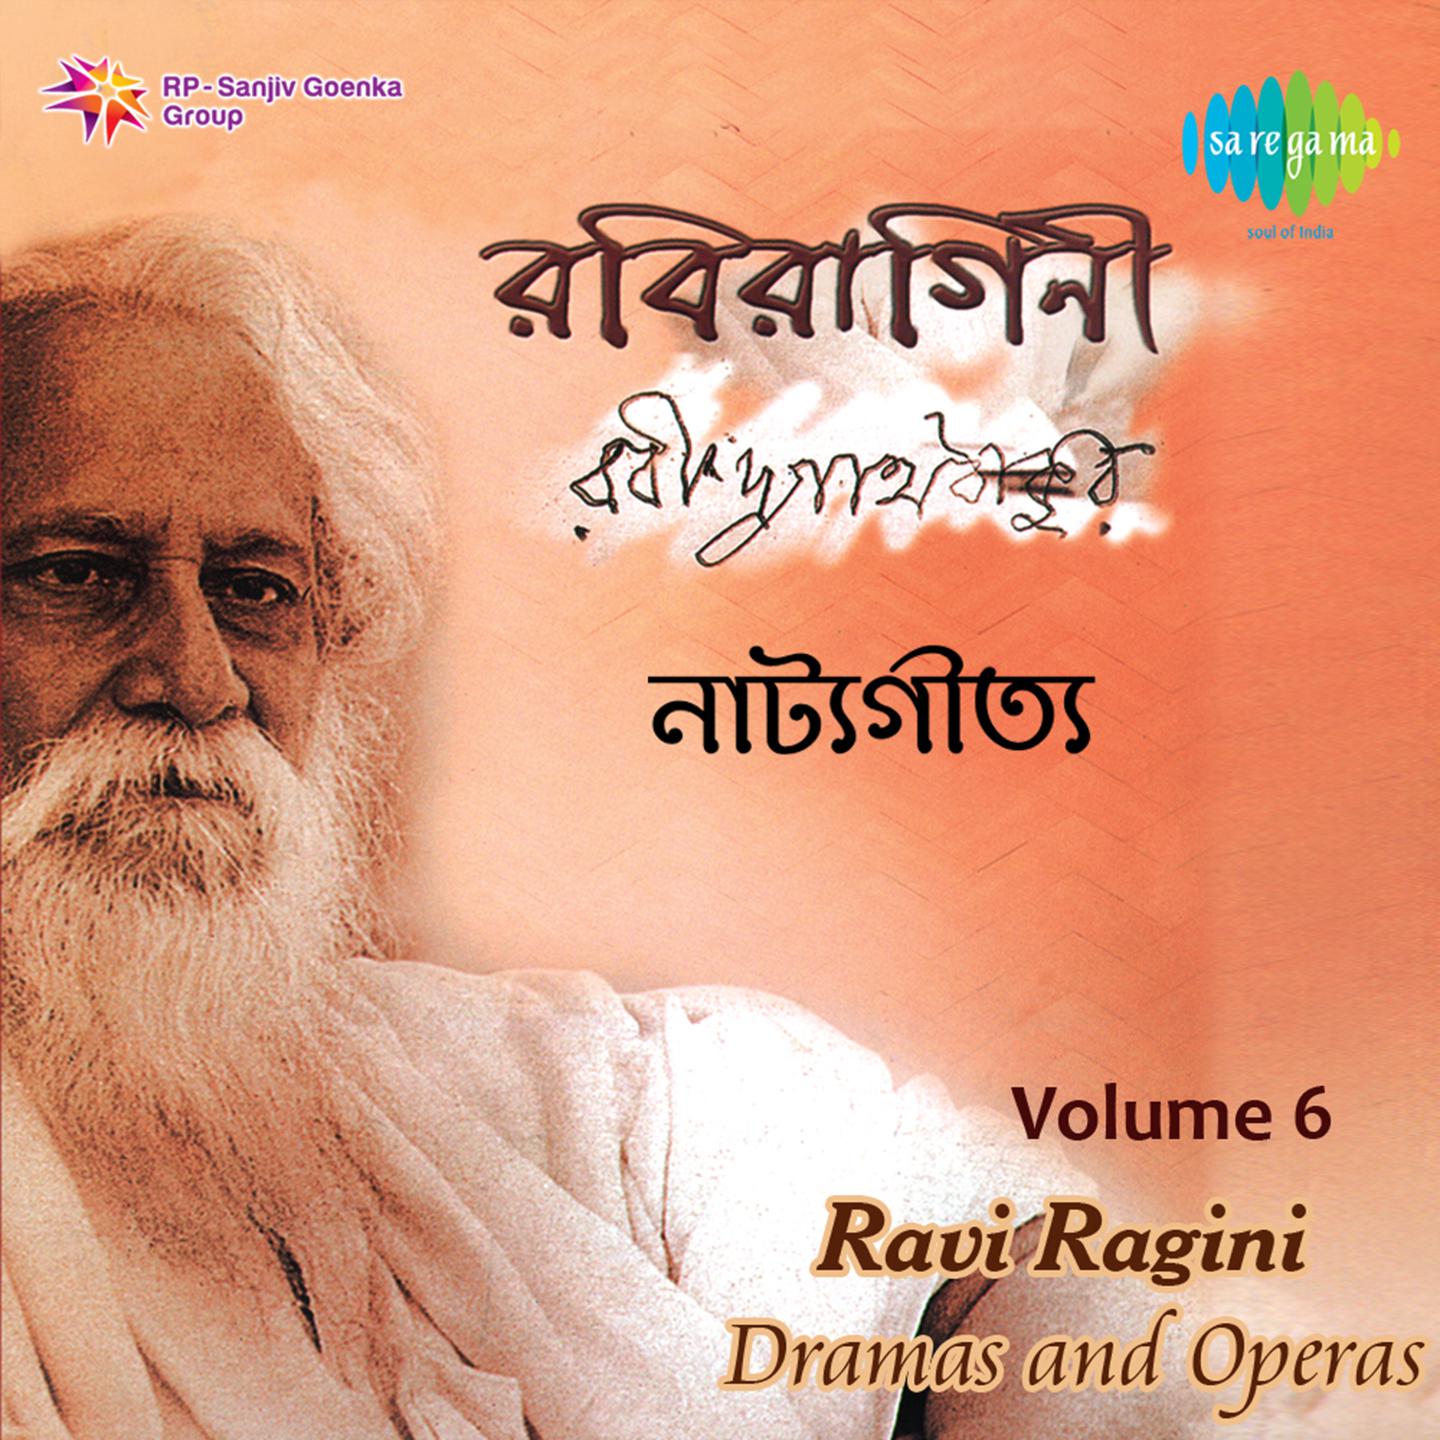 Ravi Ragini Volume 6 From Dramas And Operas